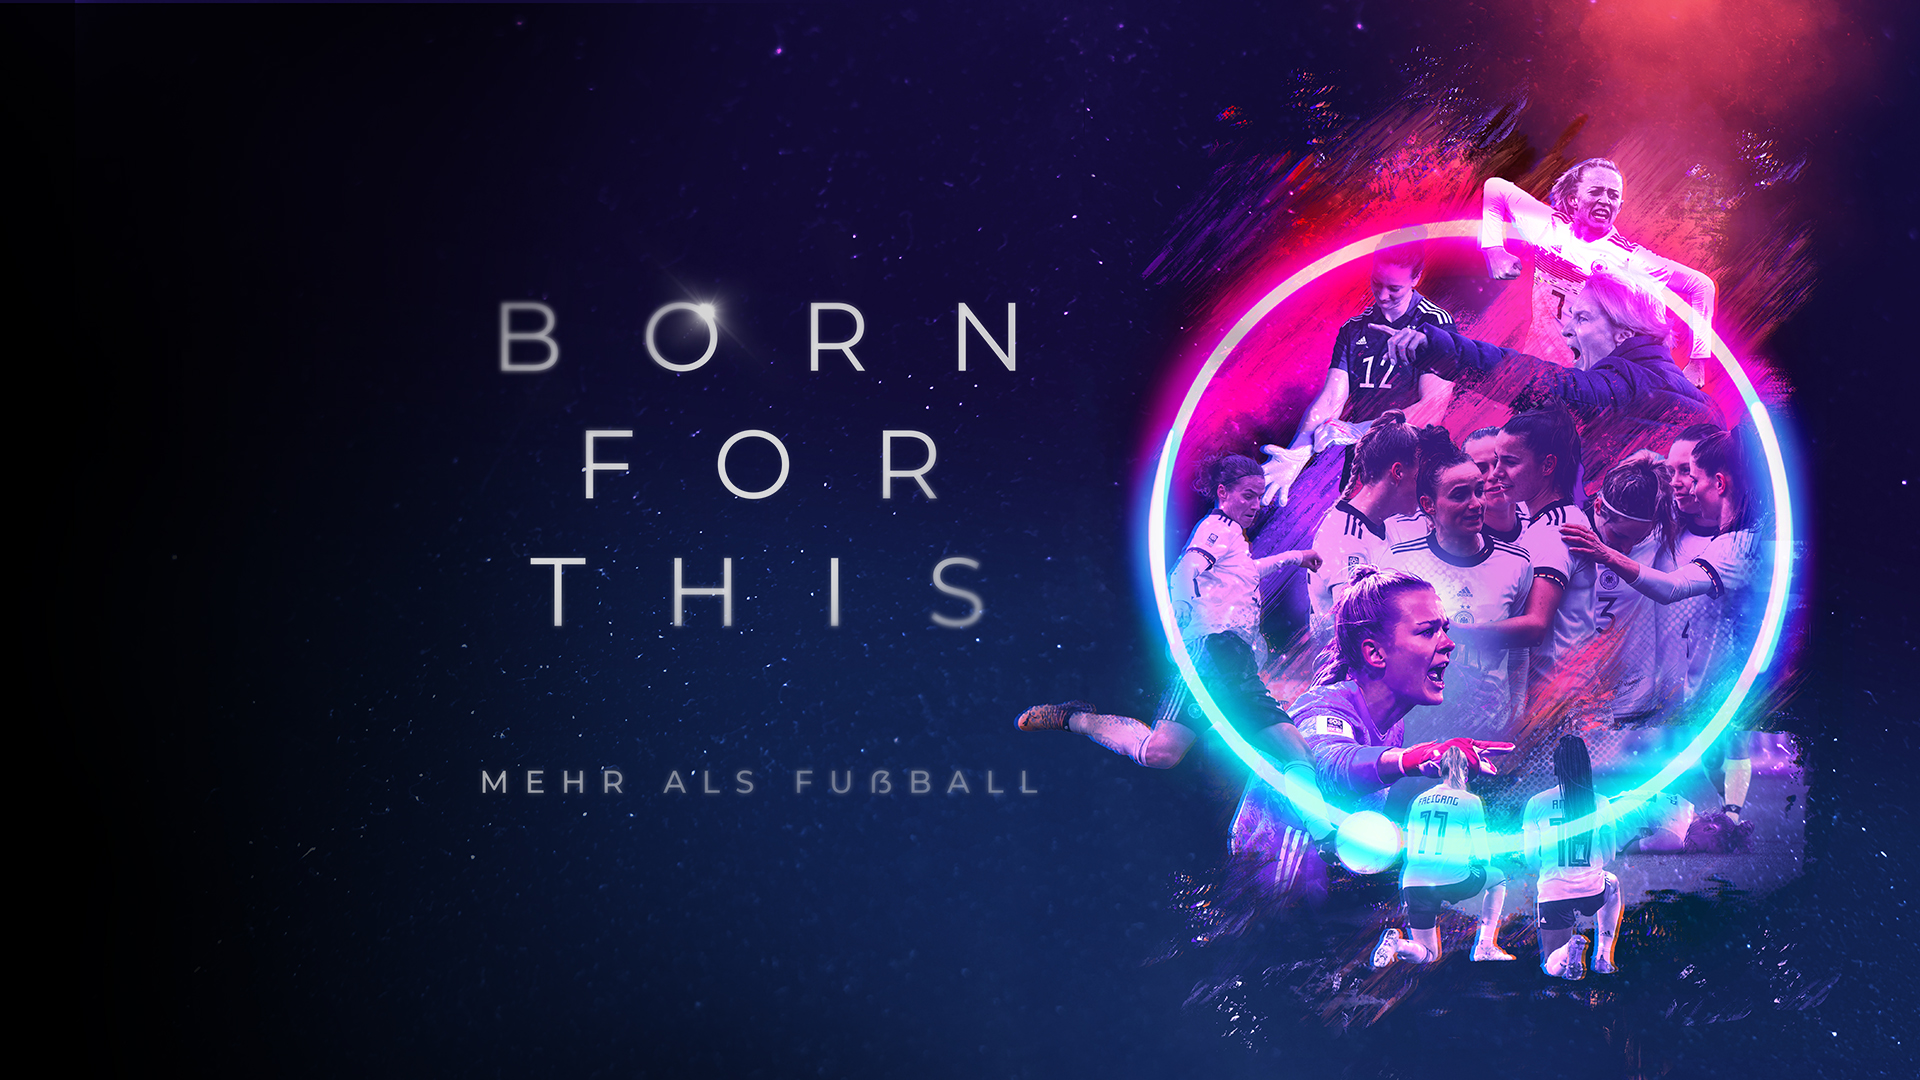 Plakat "Born for this - mehr als Fußball"